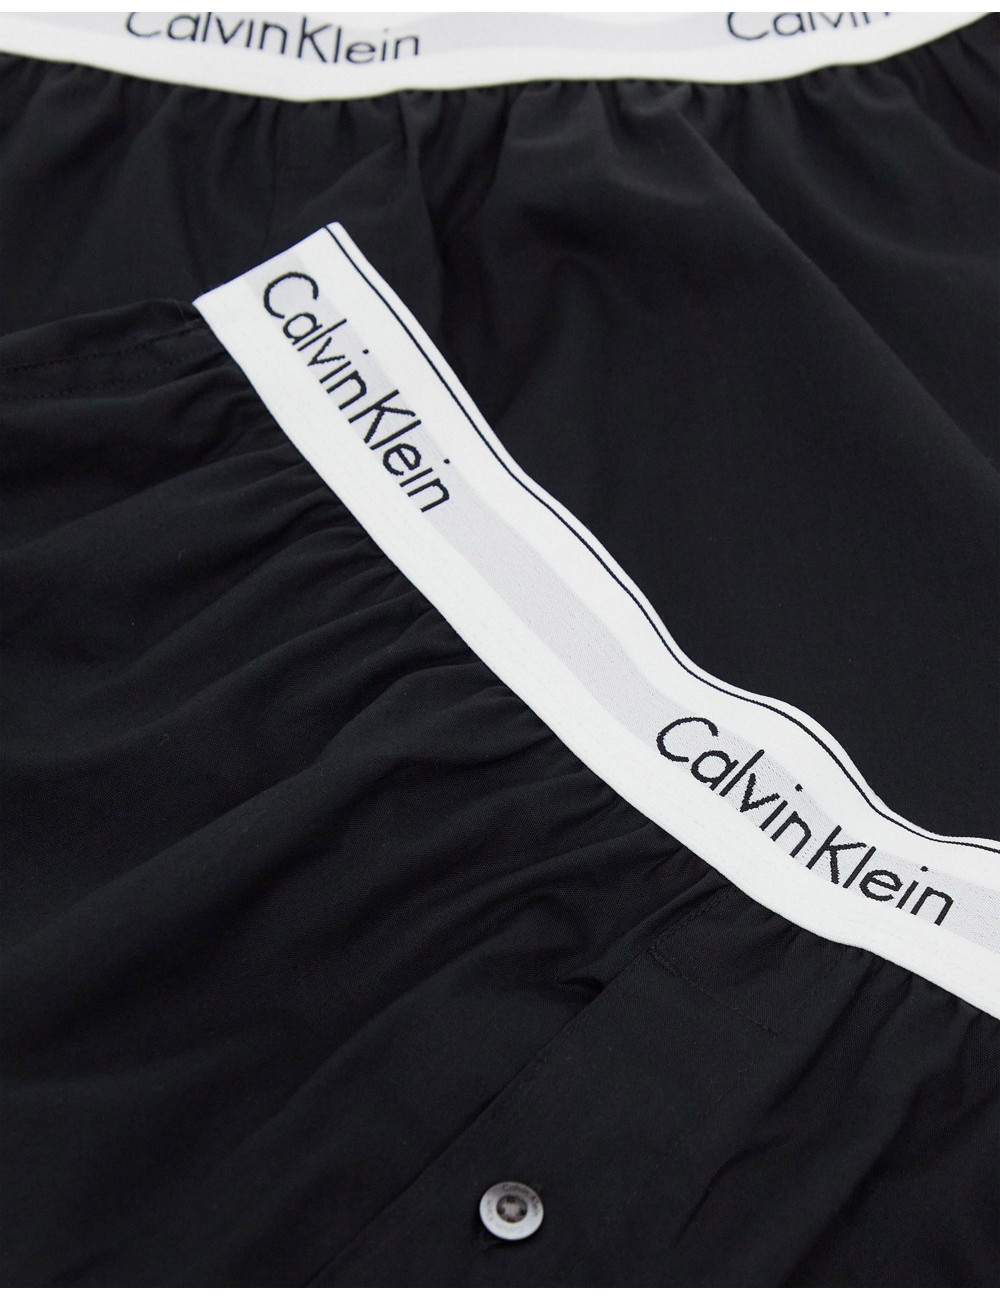 Calvin Klein 2 pack woven...